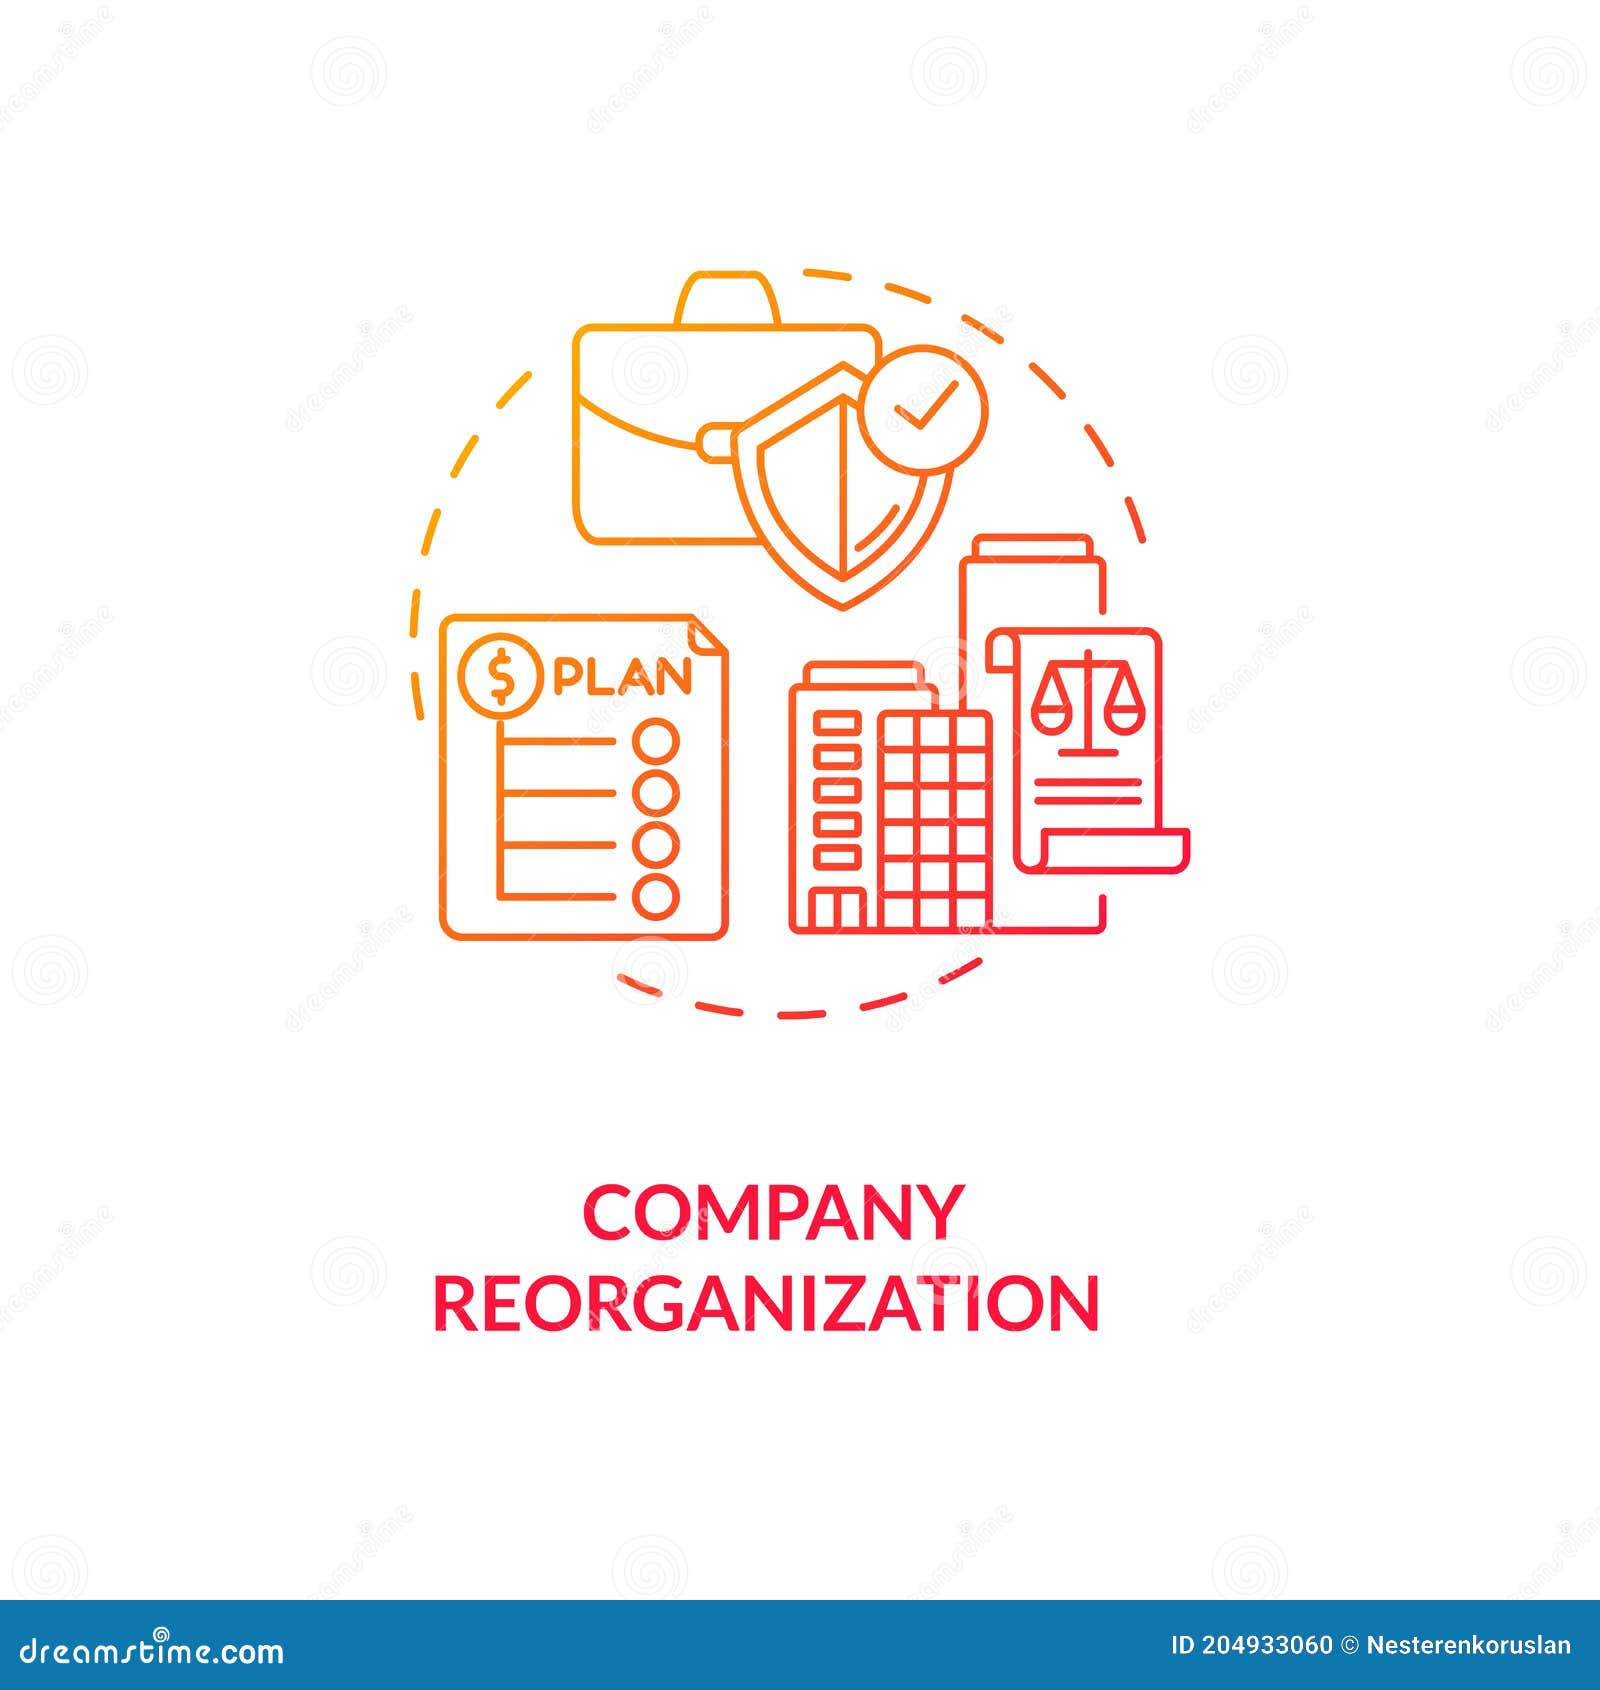 company reorganization red gradient concept icon